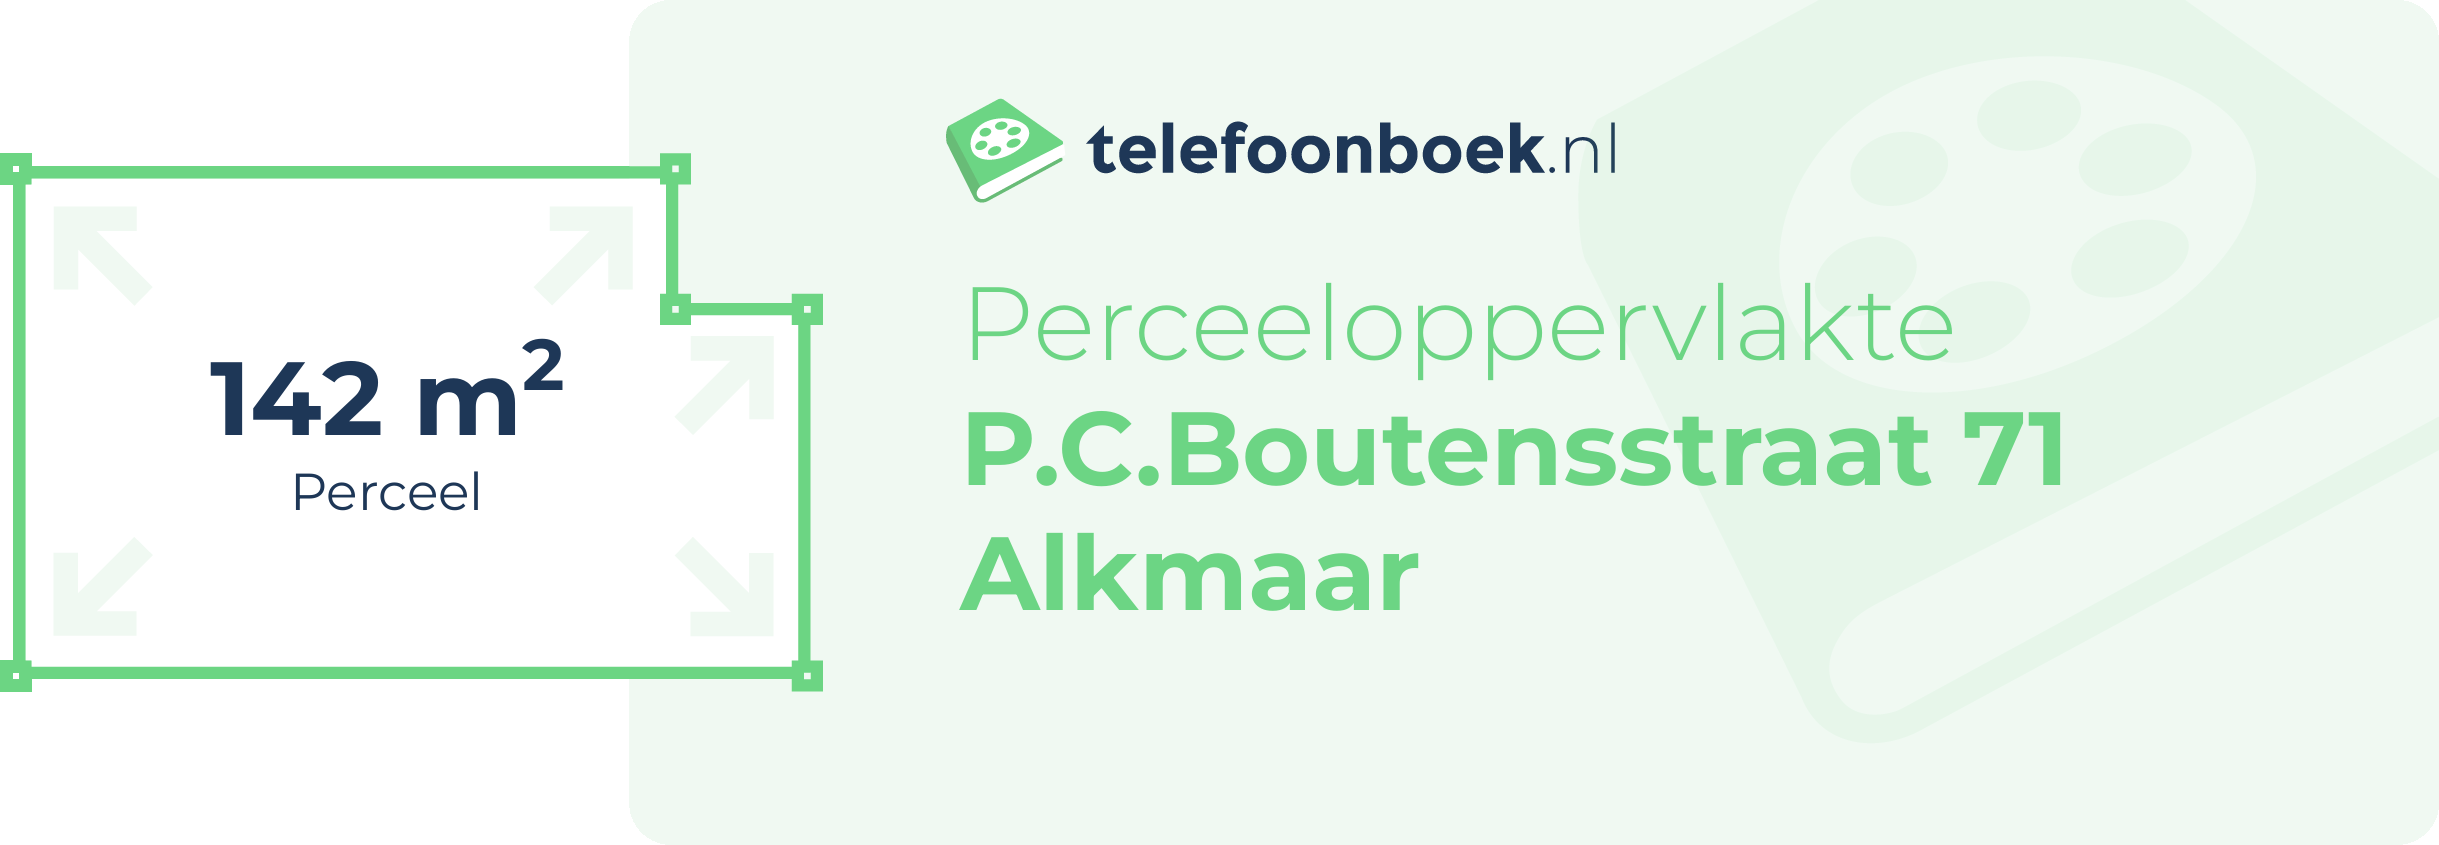 Perceeloppervlakte P.C.Boutensstraat 71 Alkmaar